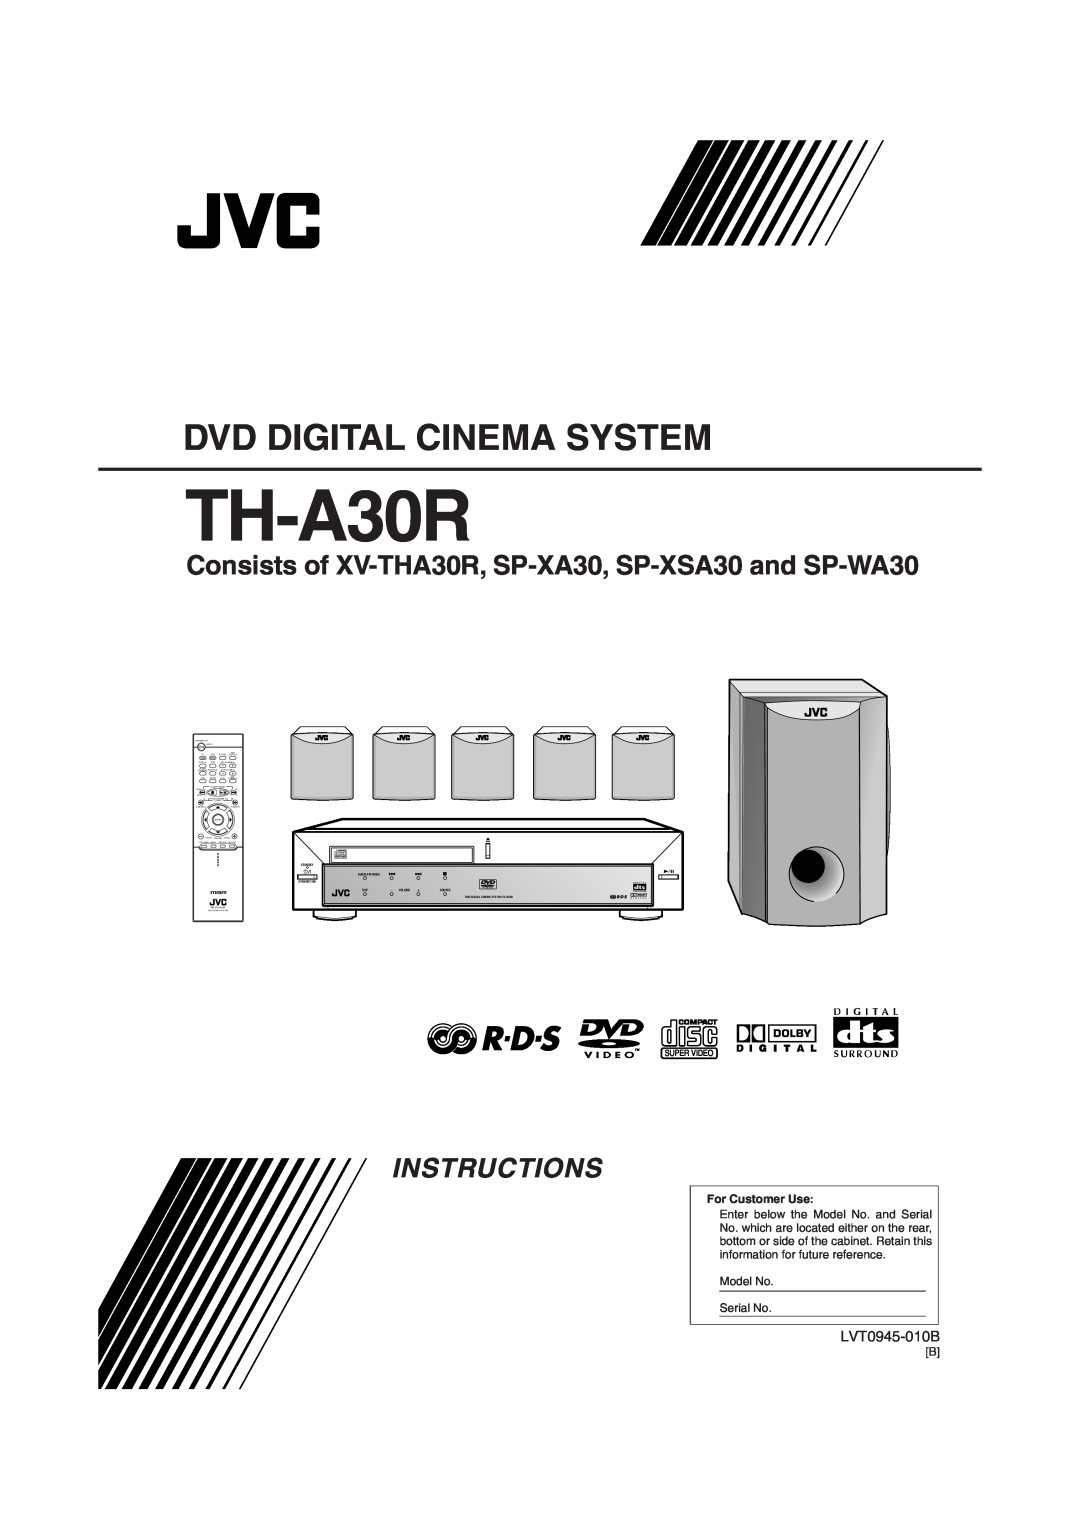 JVC XV-THA30R manual LVT0945-010B, TH-A30R, Dvd Digital Cinema System, Instructions, For Customer Use, Standby Standby/On 